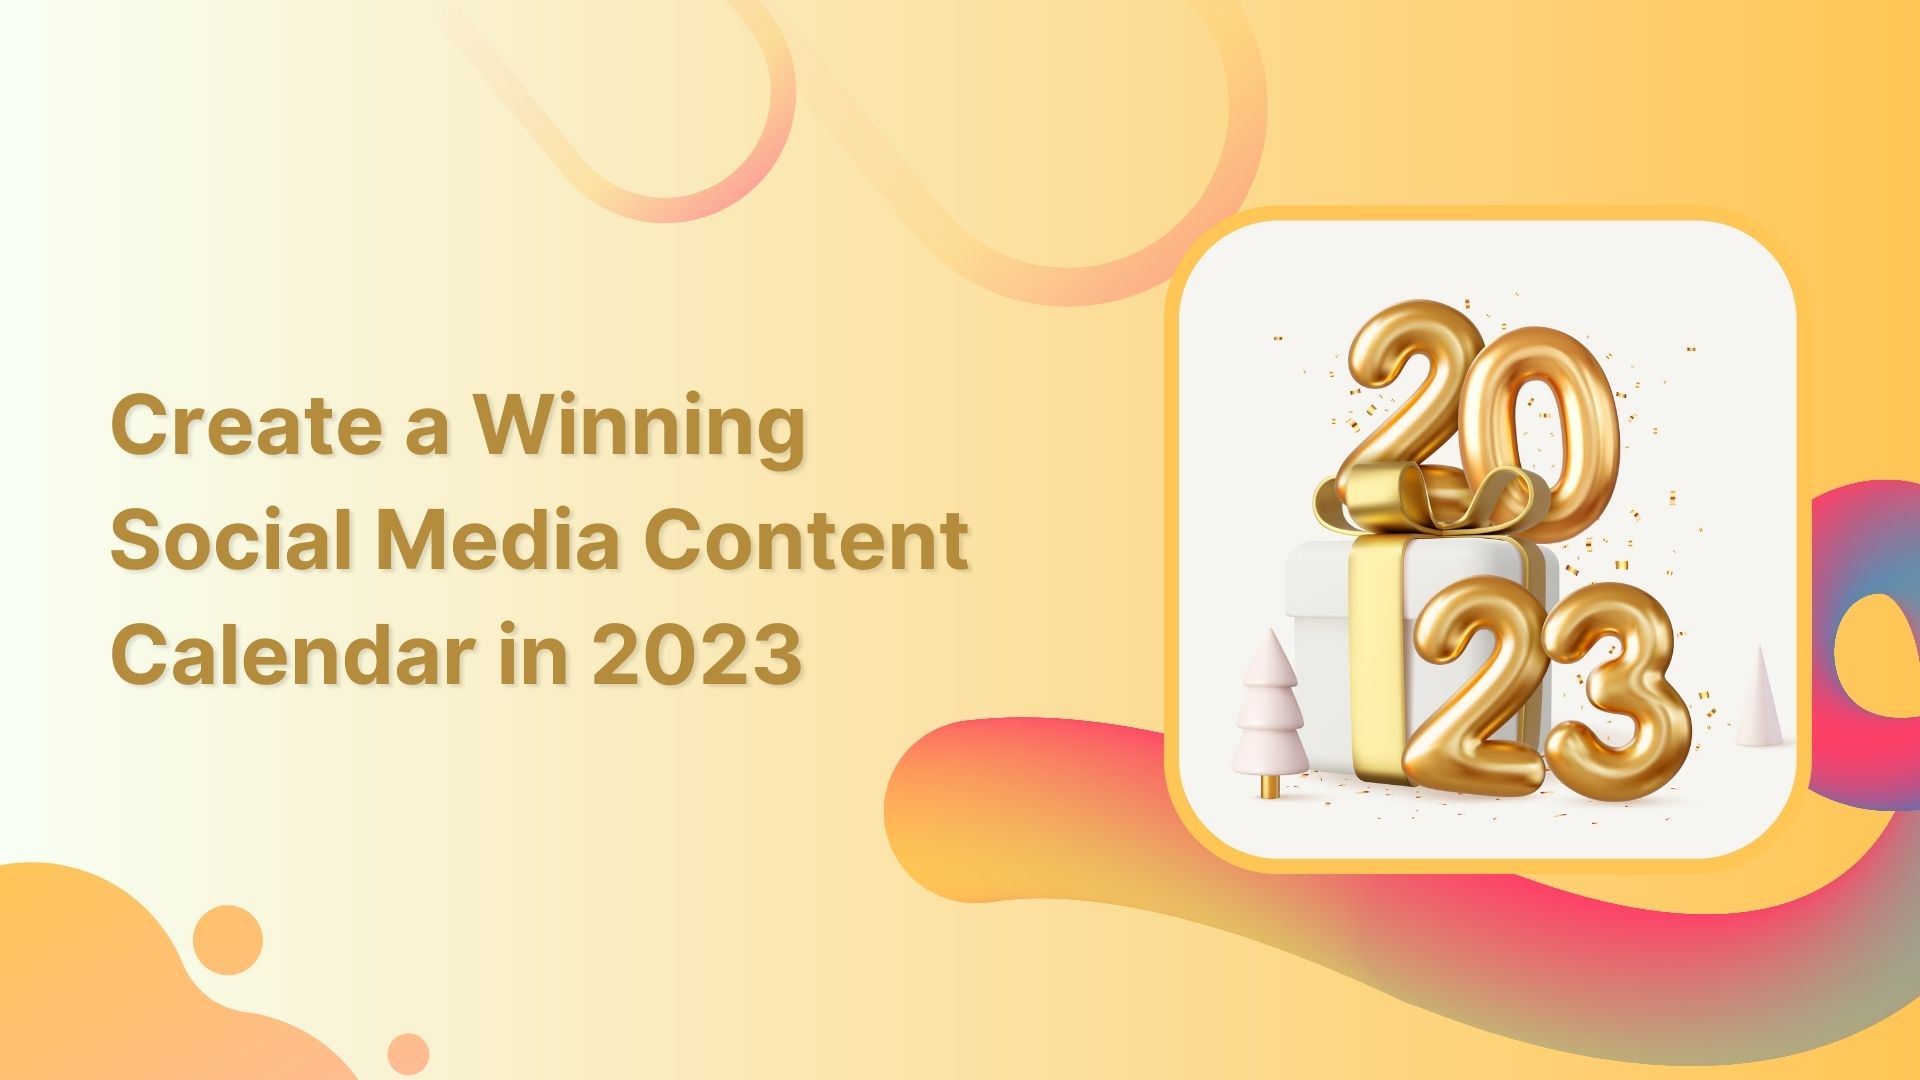 Create a Winning Social Media Content Calendar in 2023